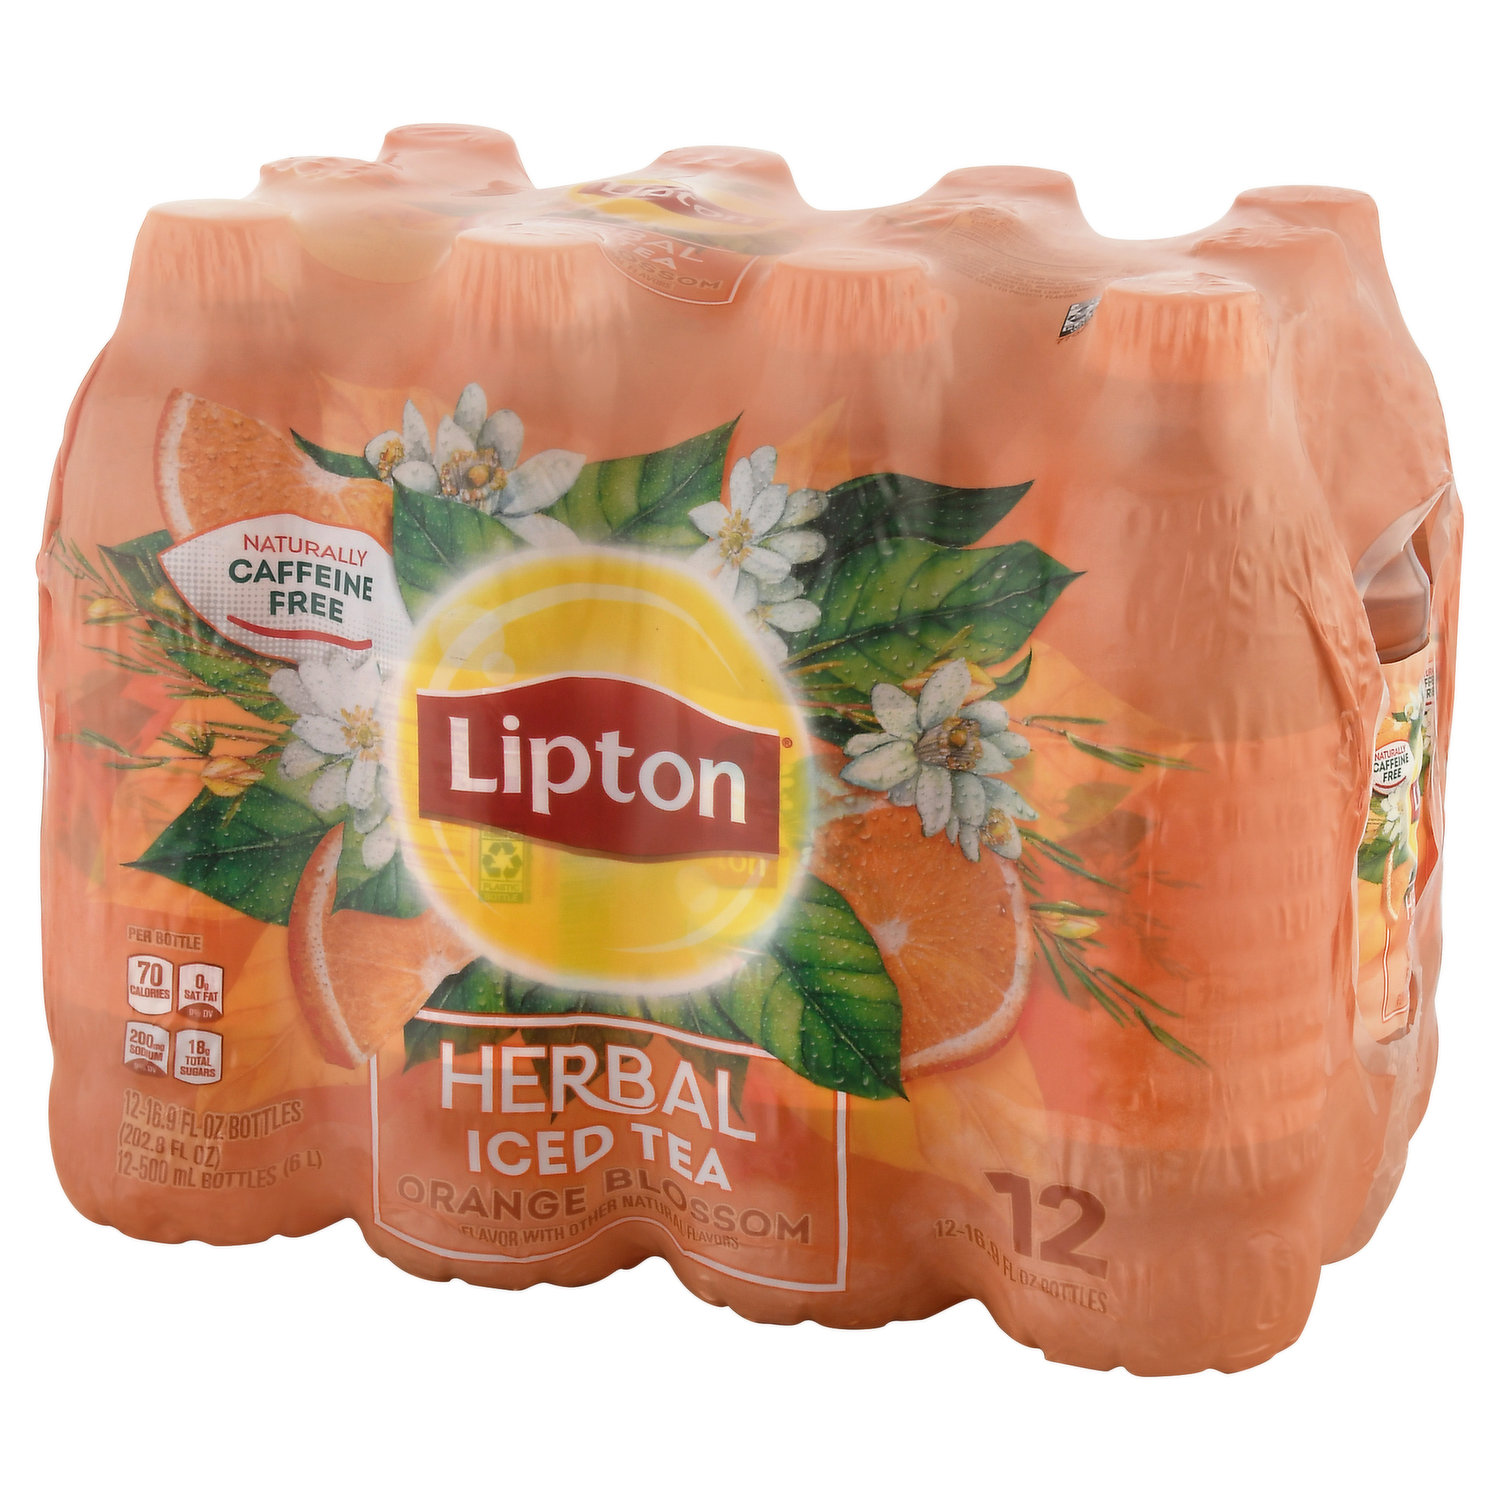 Lipton Herbal Orange Blossom Iced Tea 12 Ea, Ready To Drink